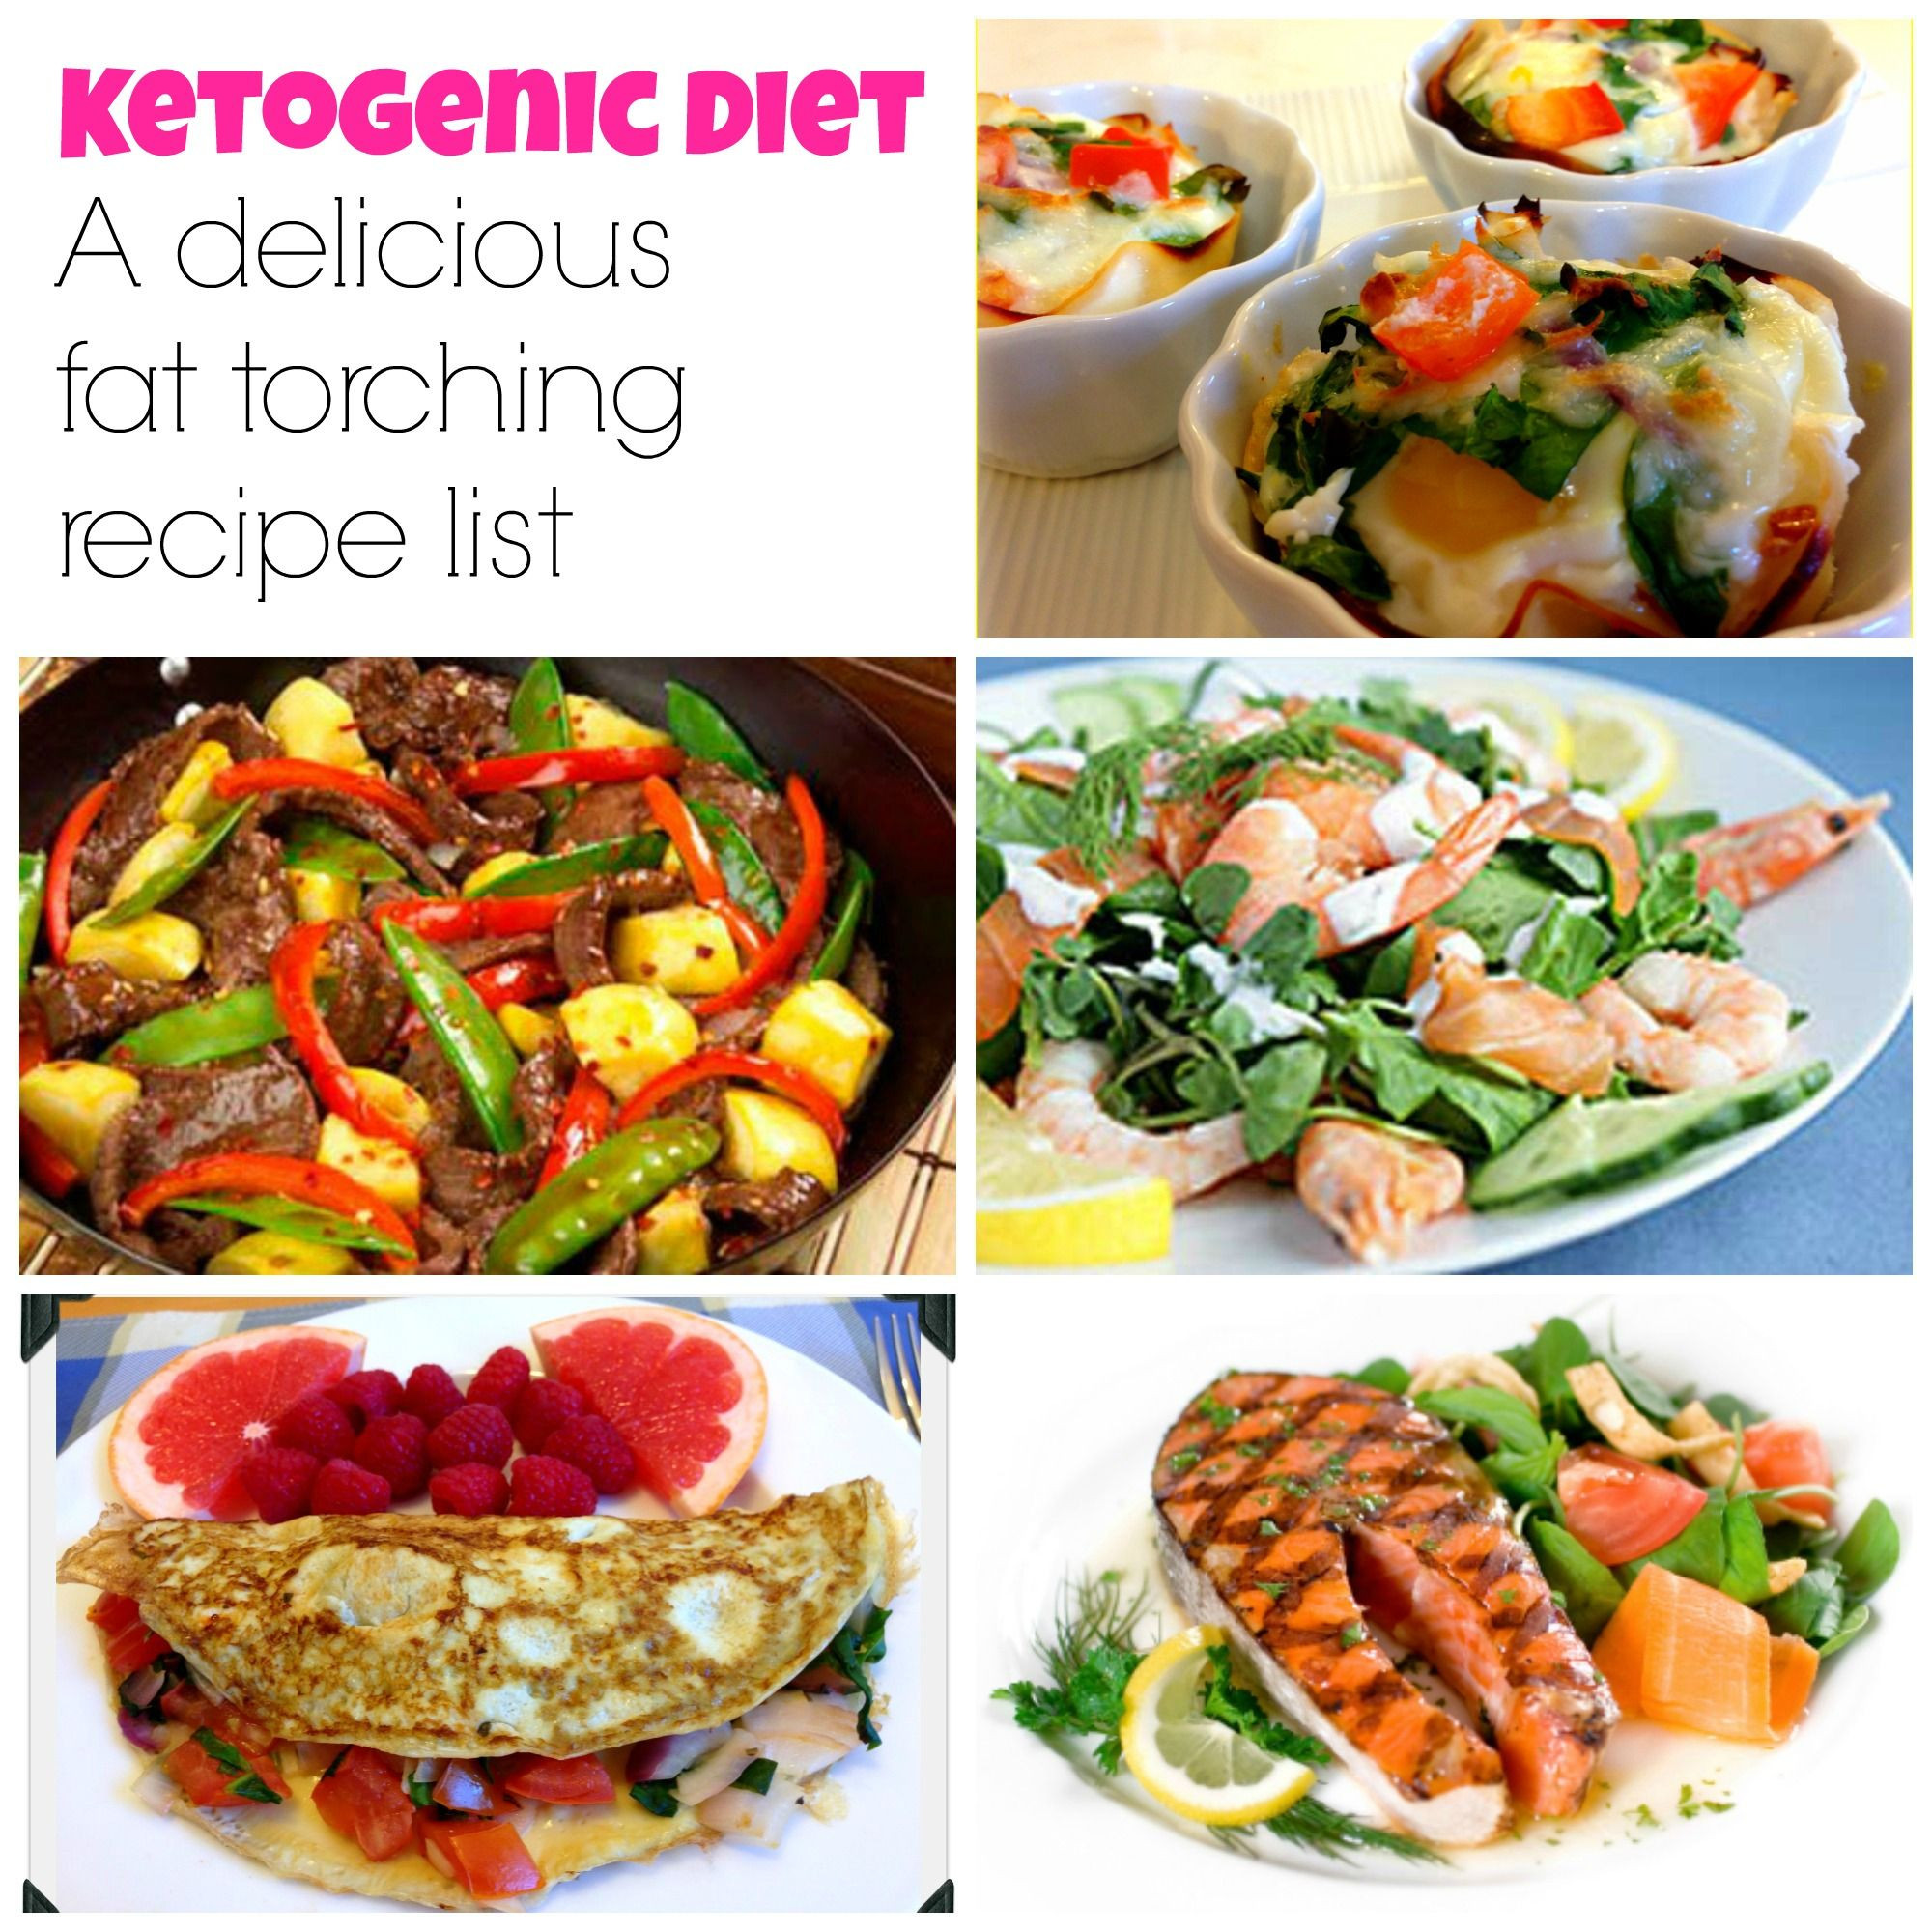 Keto Recipes Dinner Ketogenic Diet
 The Best Ketogenic Diet Recipes